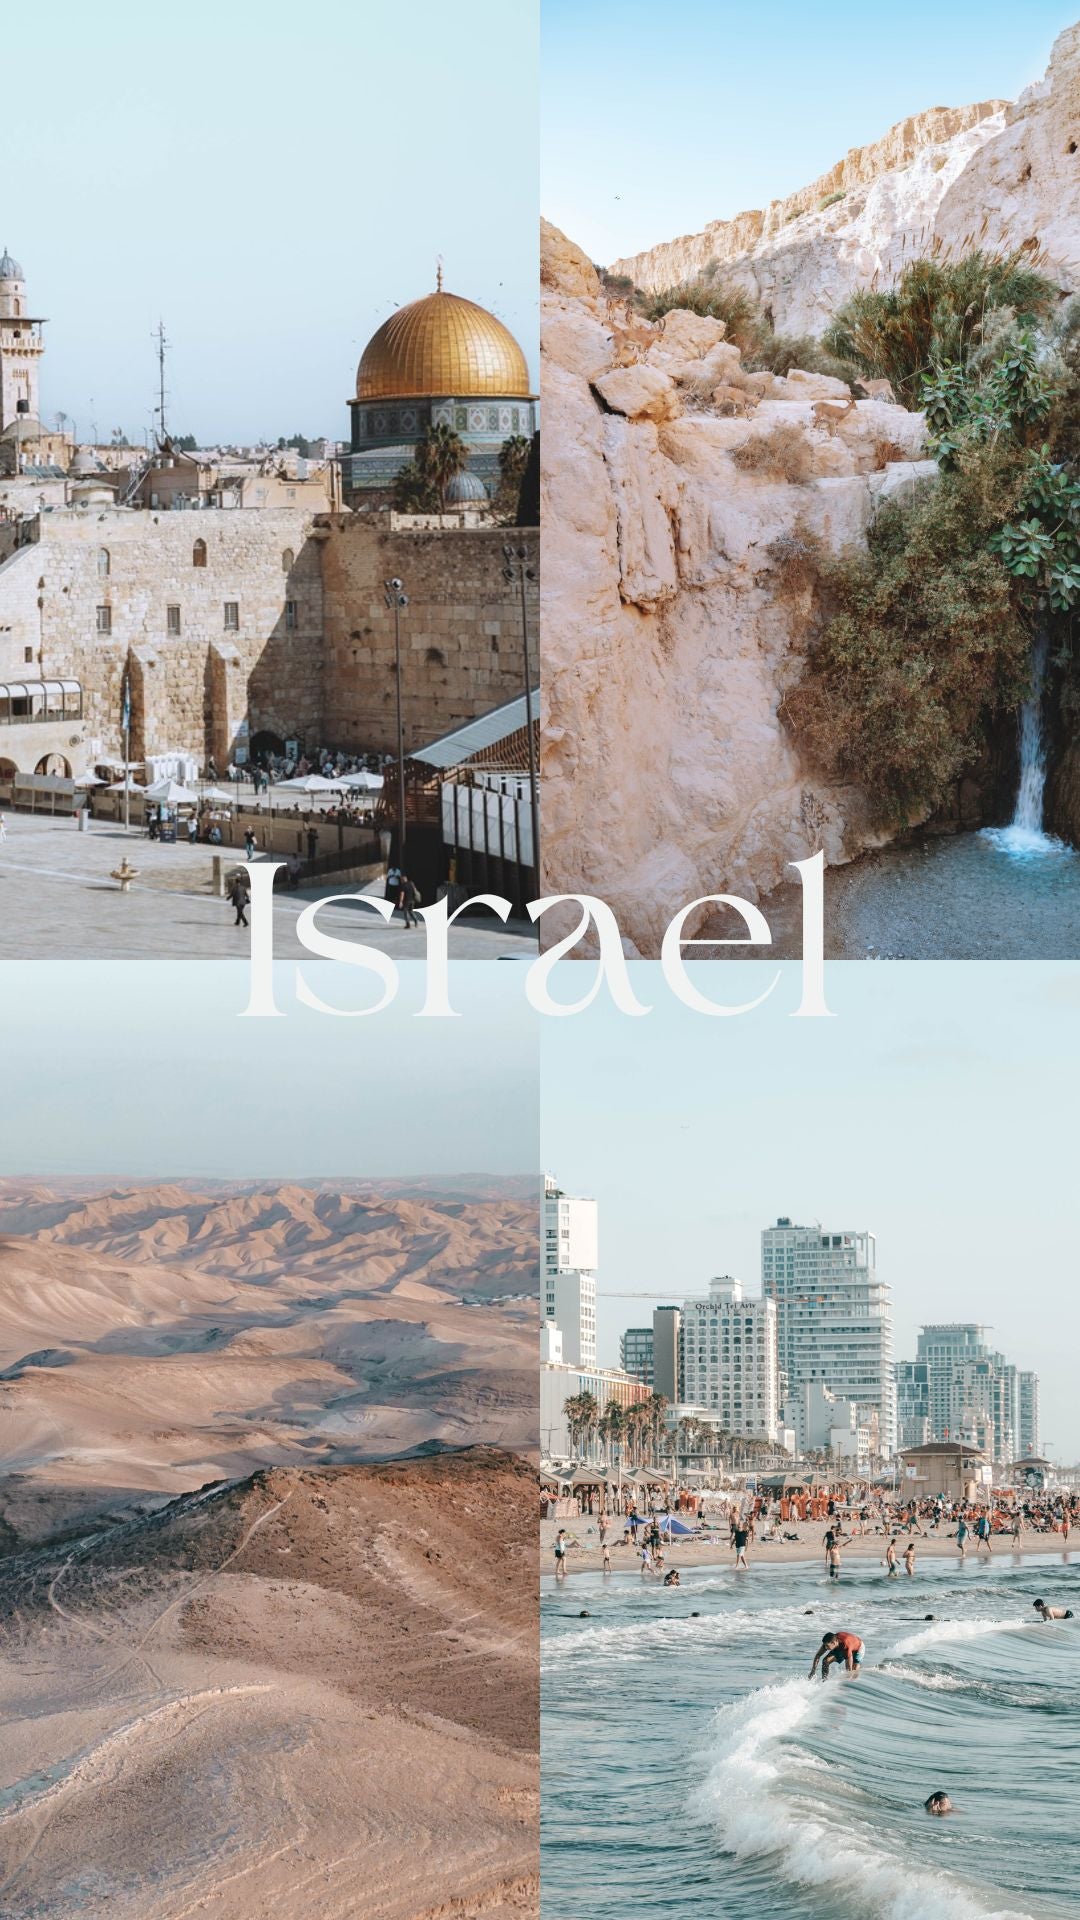 Planning to visit Israel?